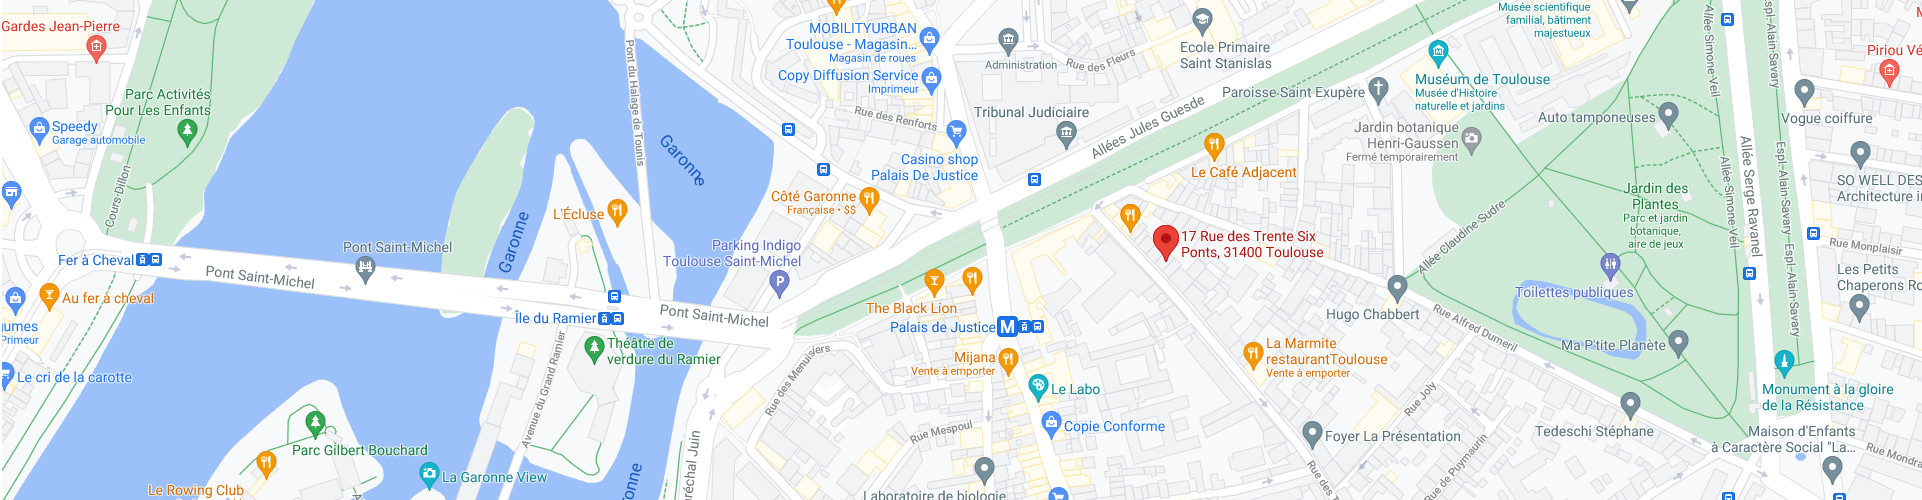 Cartographie Google Maps - Opteam Avocats - 17 rue des trente six ponts, 31500 Toulouse